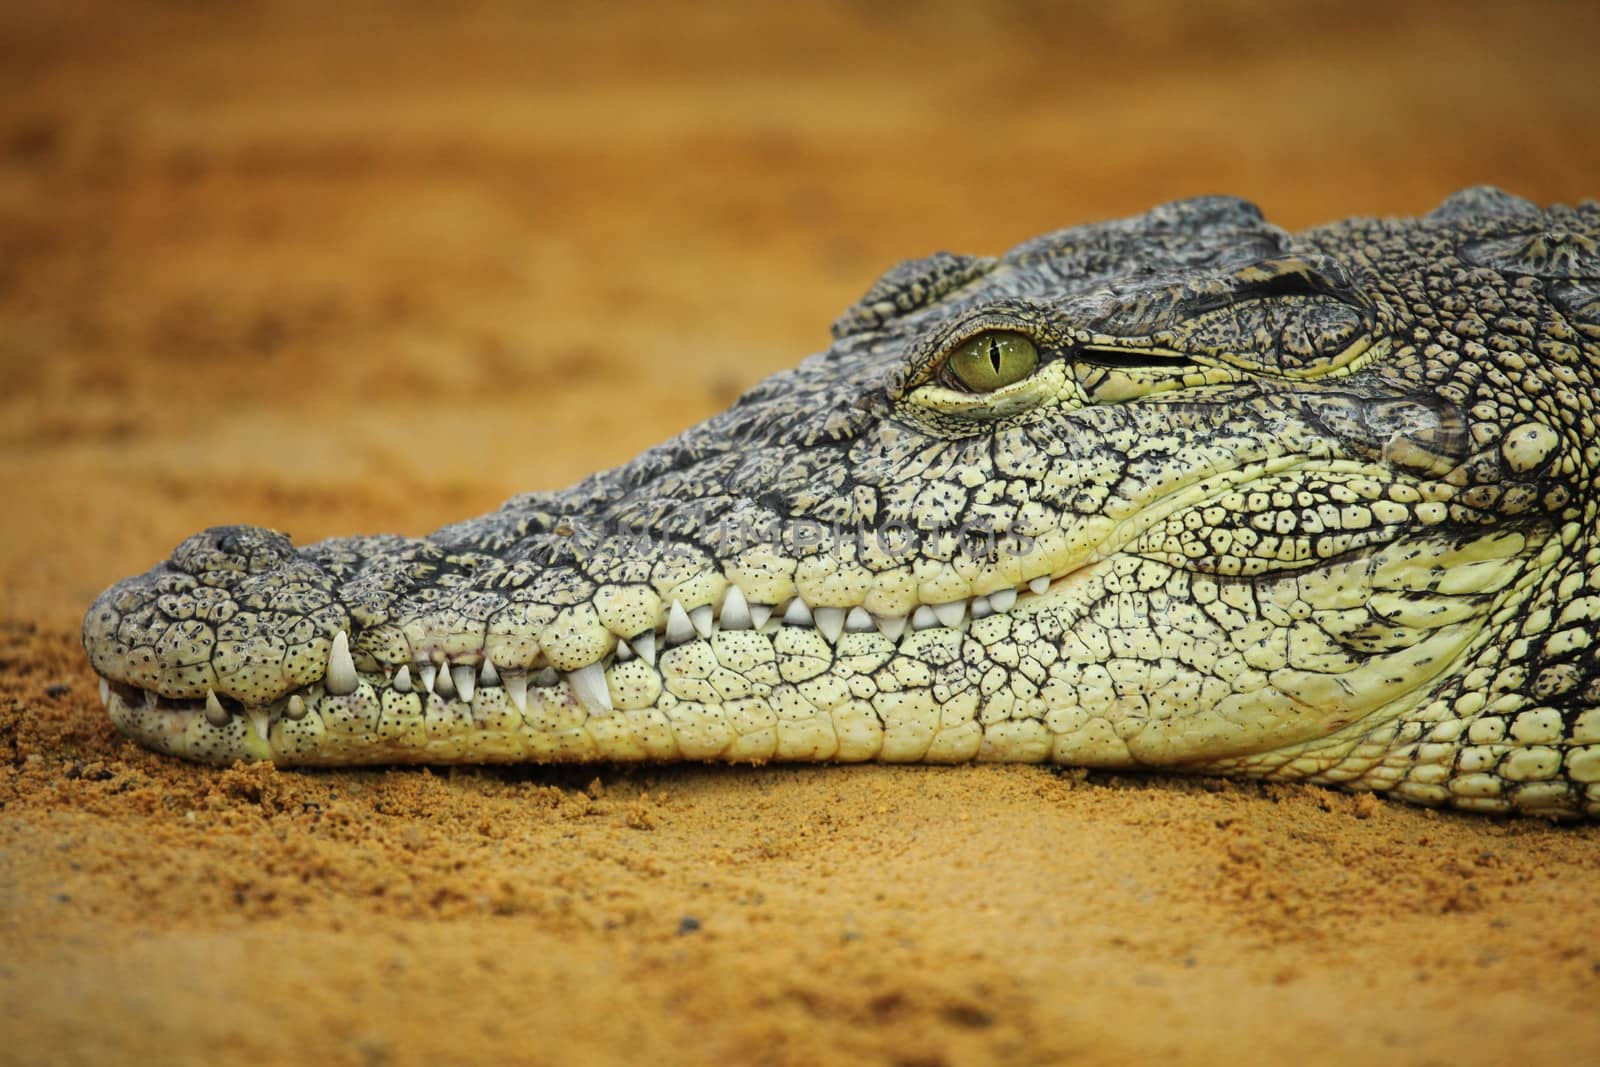 a dangerous Nile Crocodile